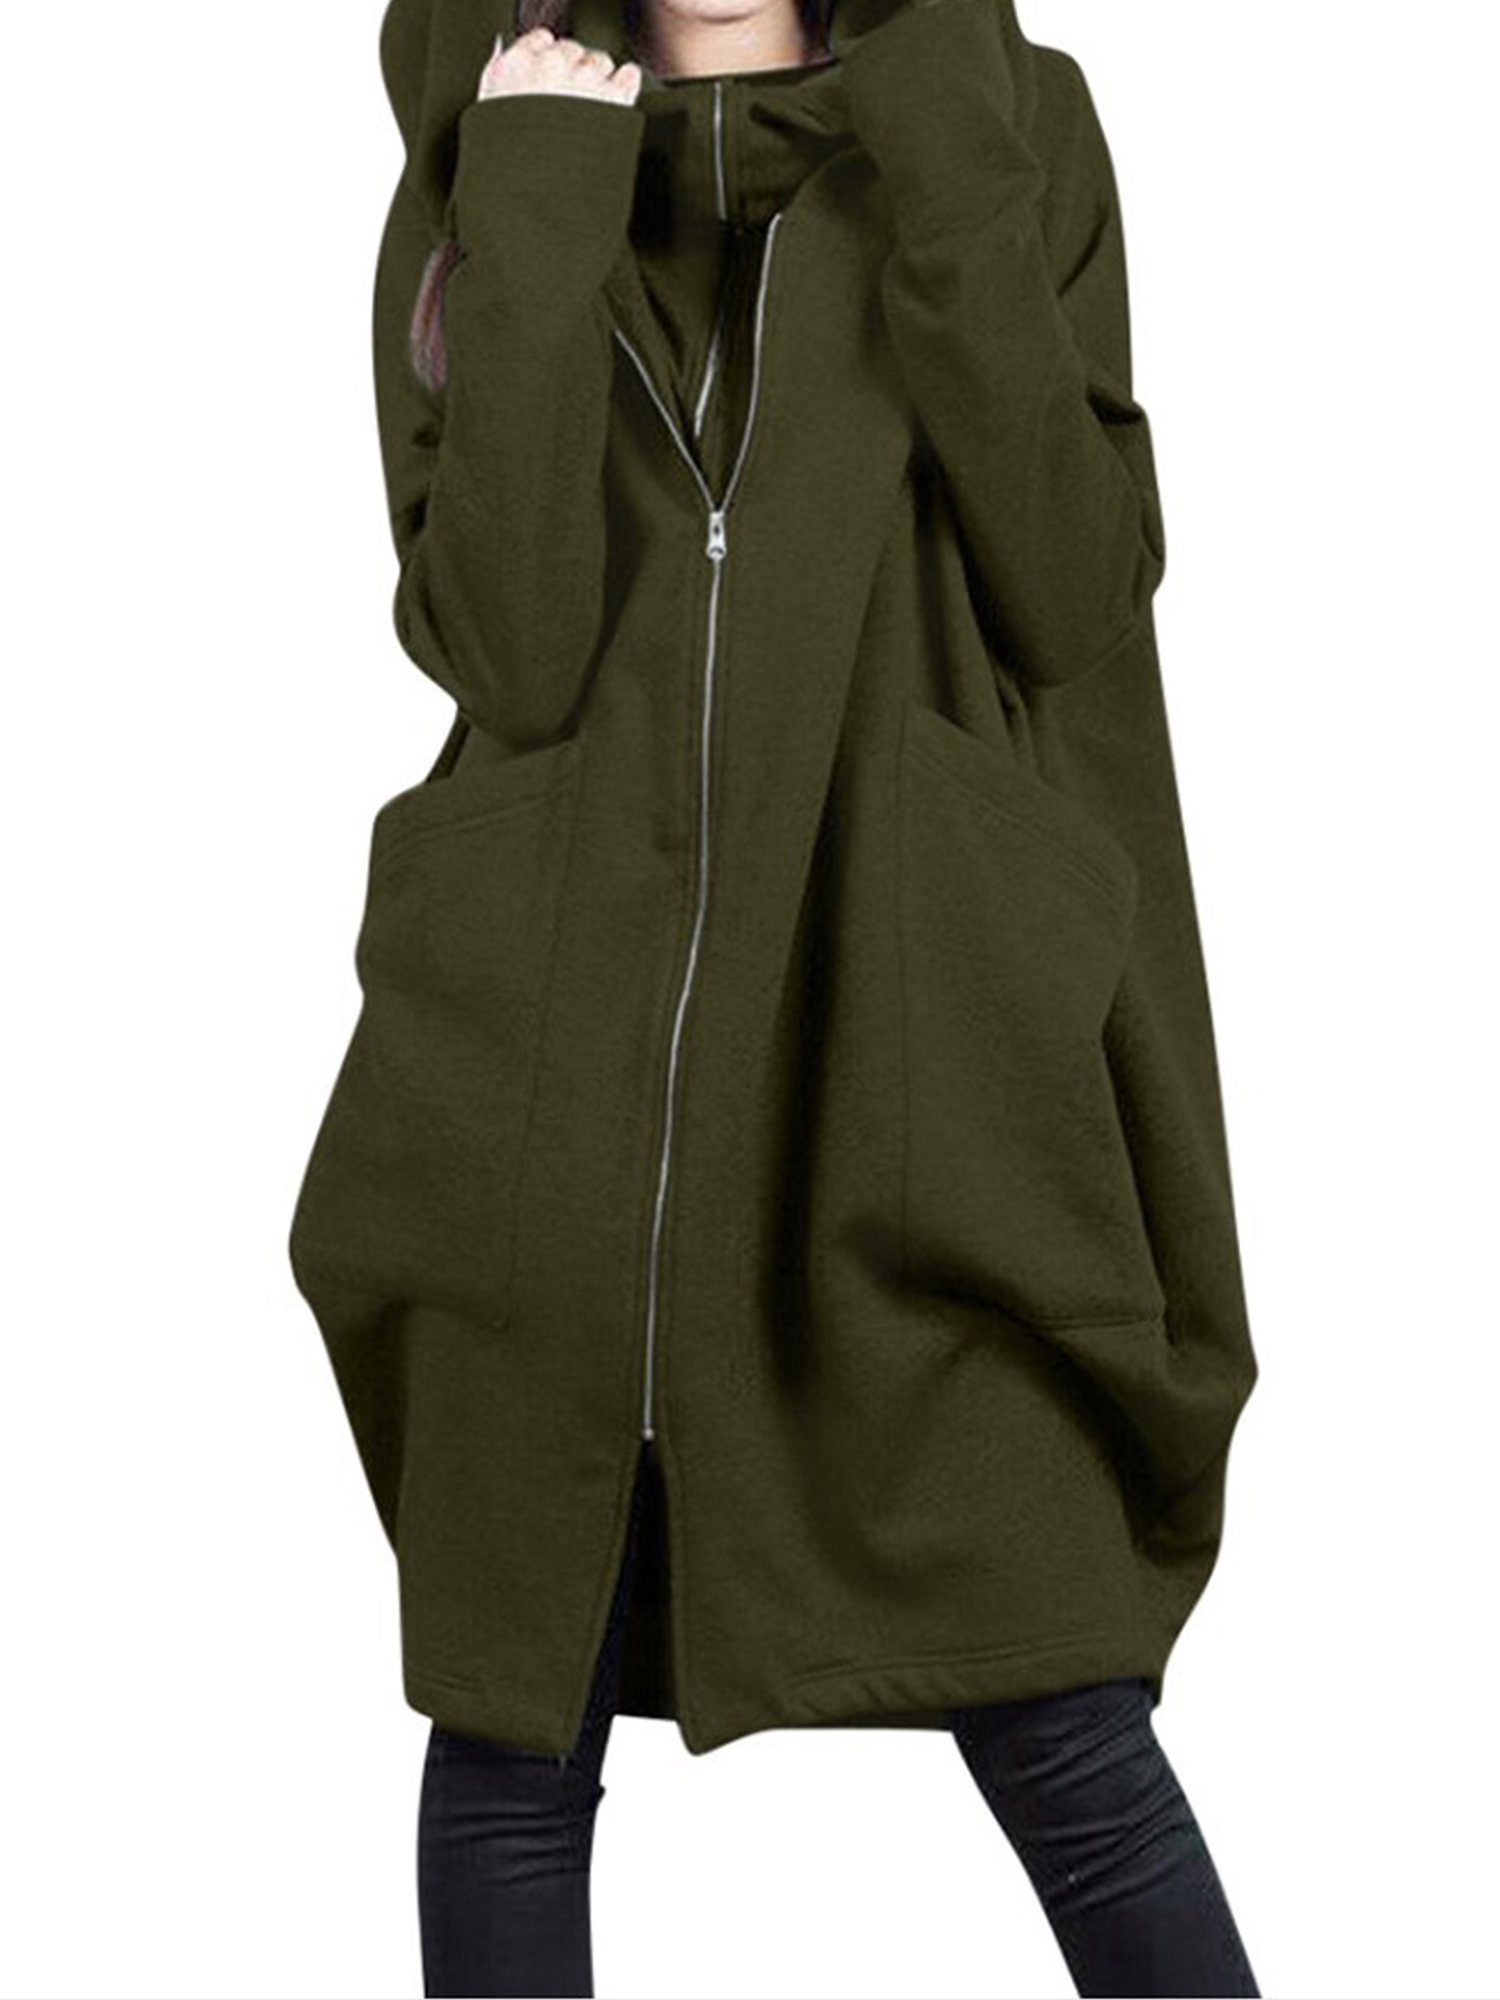 Ladies Plus Size Zipper Hoodies Mid-Length Loose Coat Casual Pocket Jackets Women Autumn Baggy Warm Overcoat Office Working Lounge Wear Women Plus Parkas Coats Anoraks - image 1 of 4